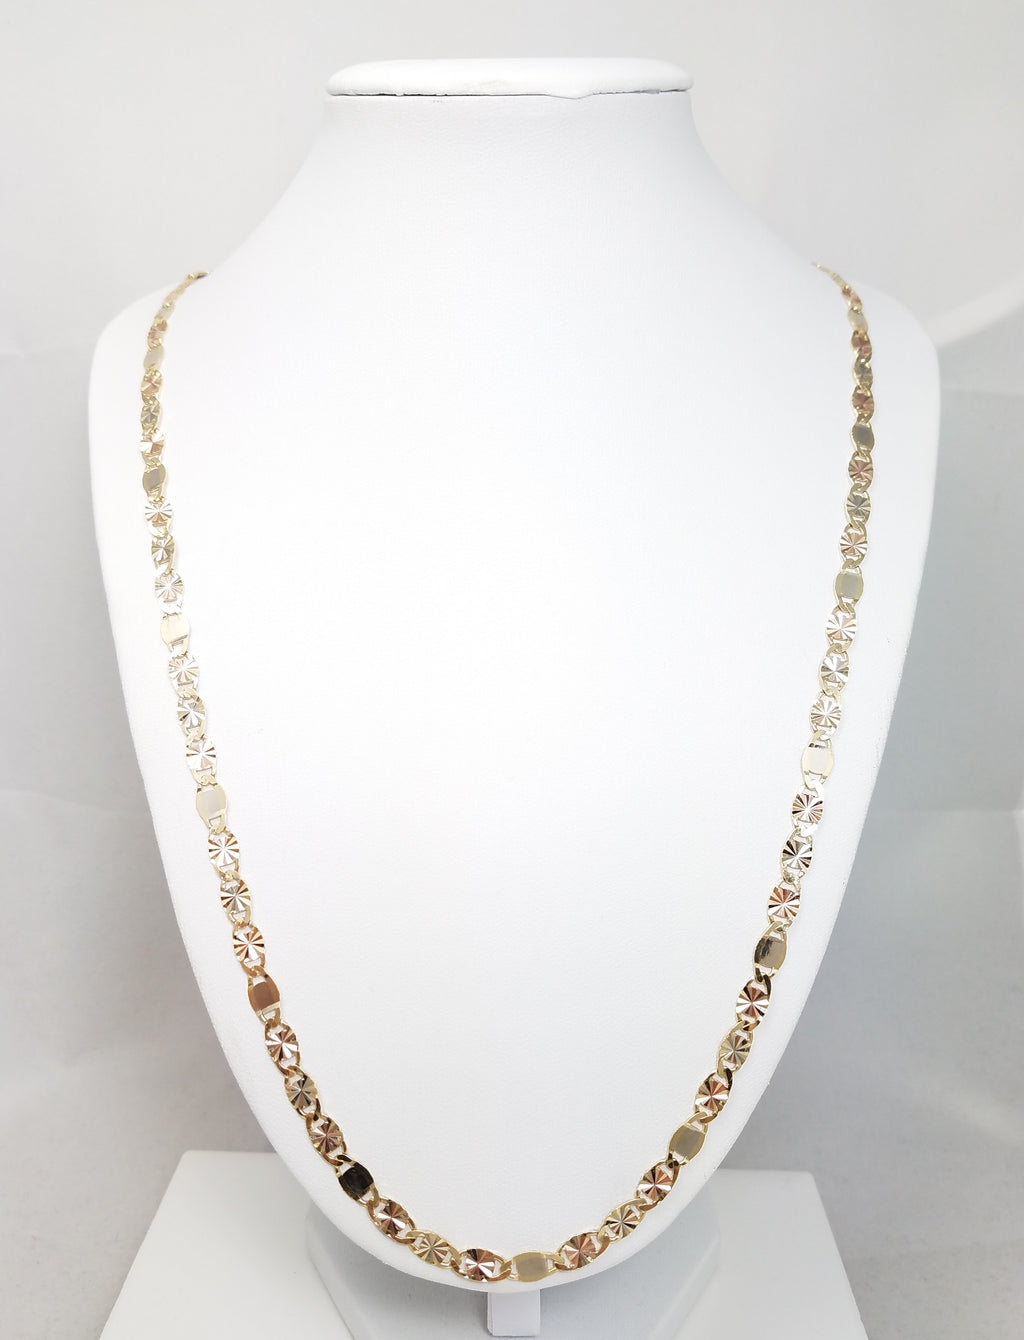 26" 14k Tri-Color Gold Diamond Cut Chain Necklace